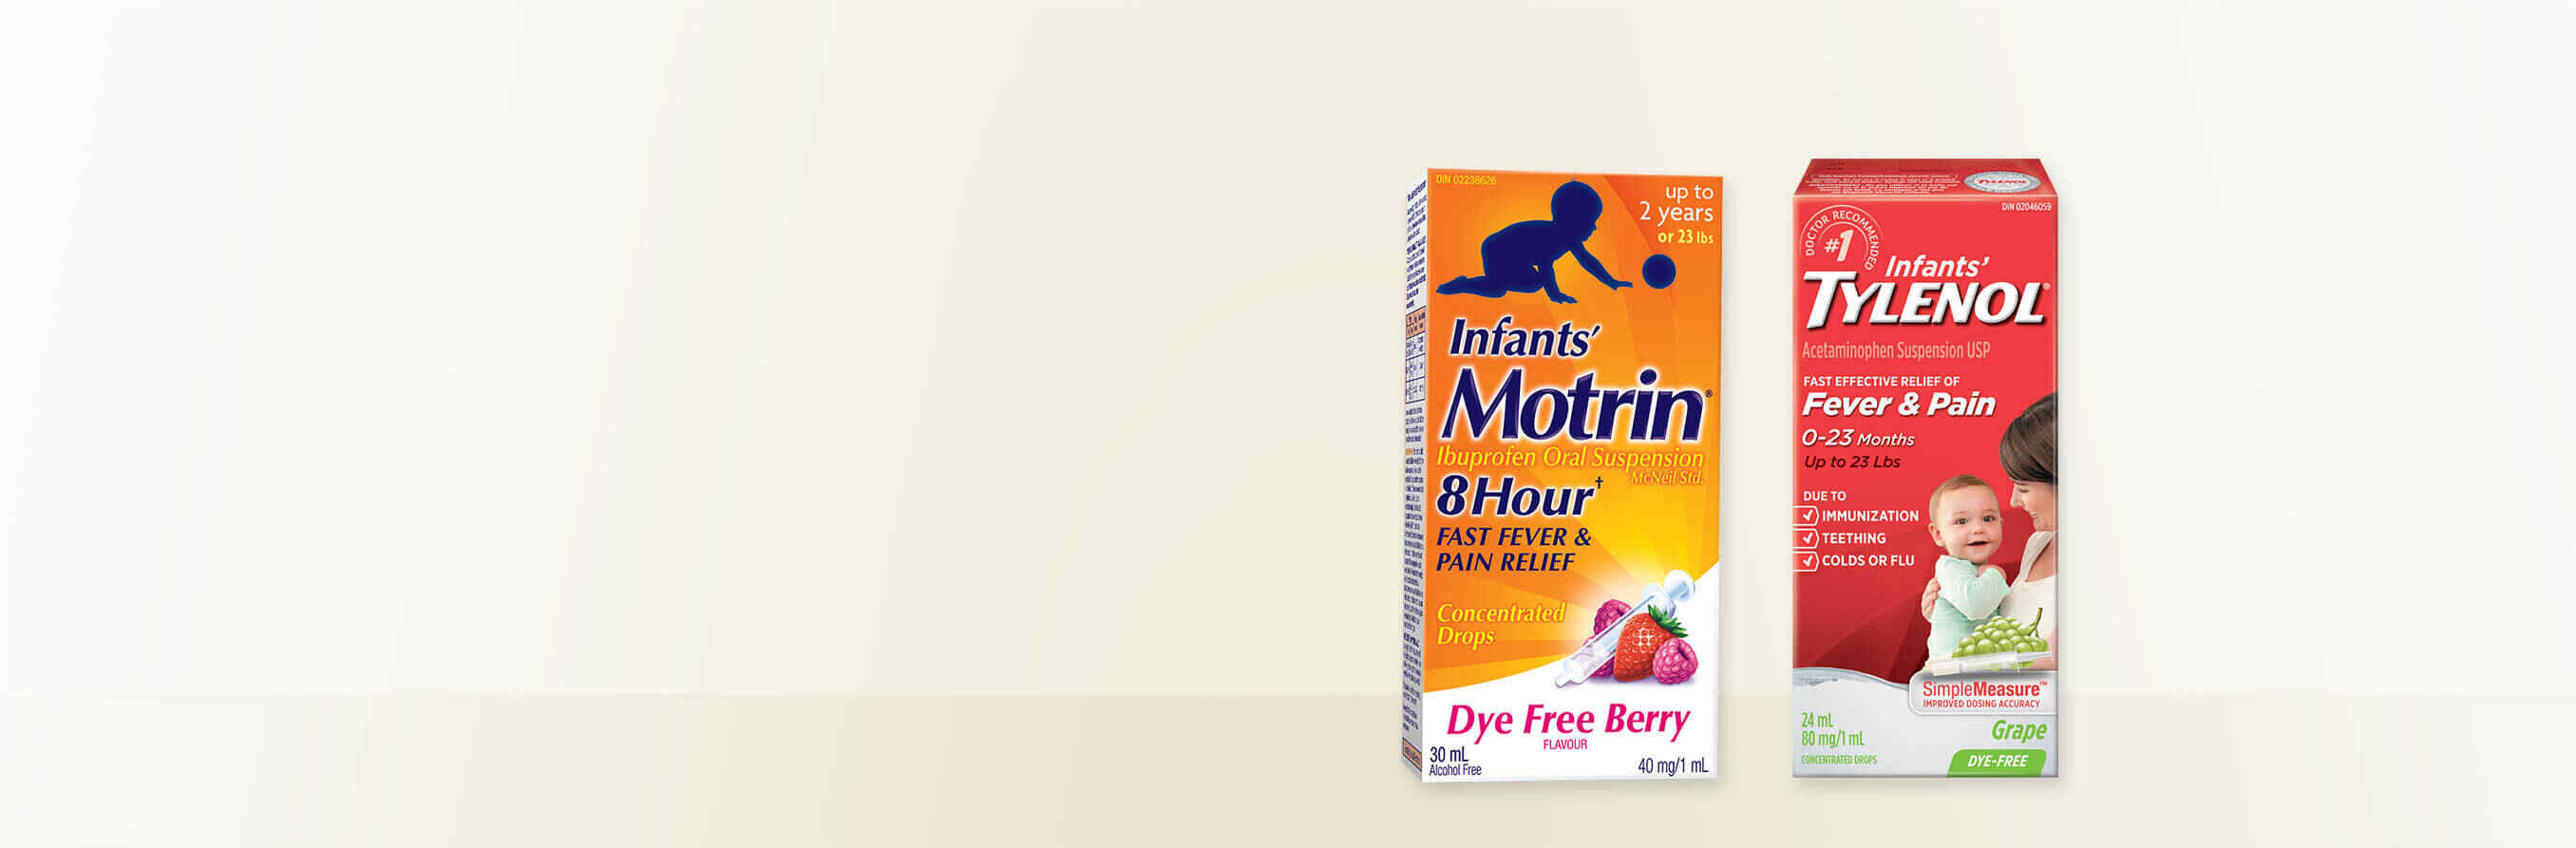 Infants' Motrin and Infants' Tylenol